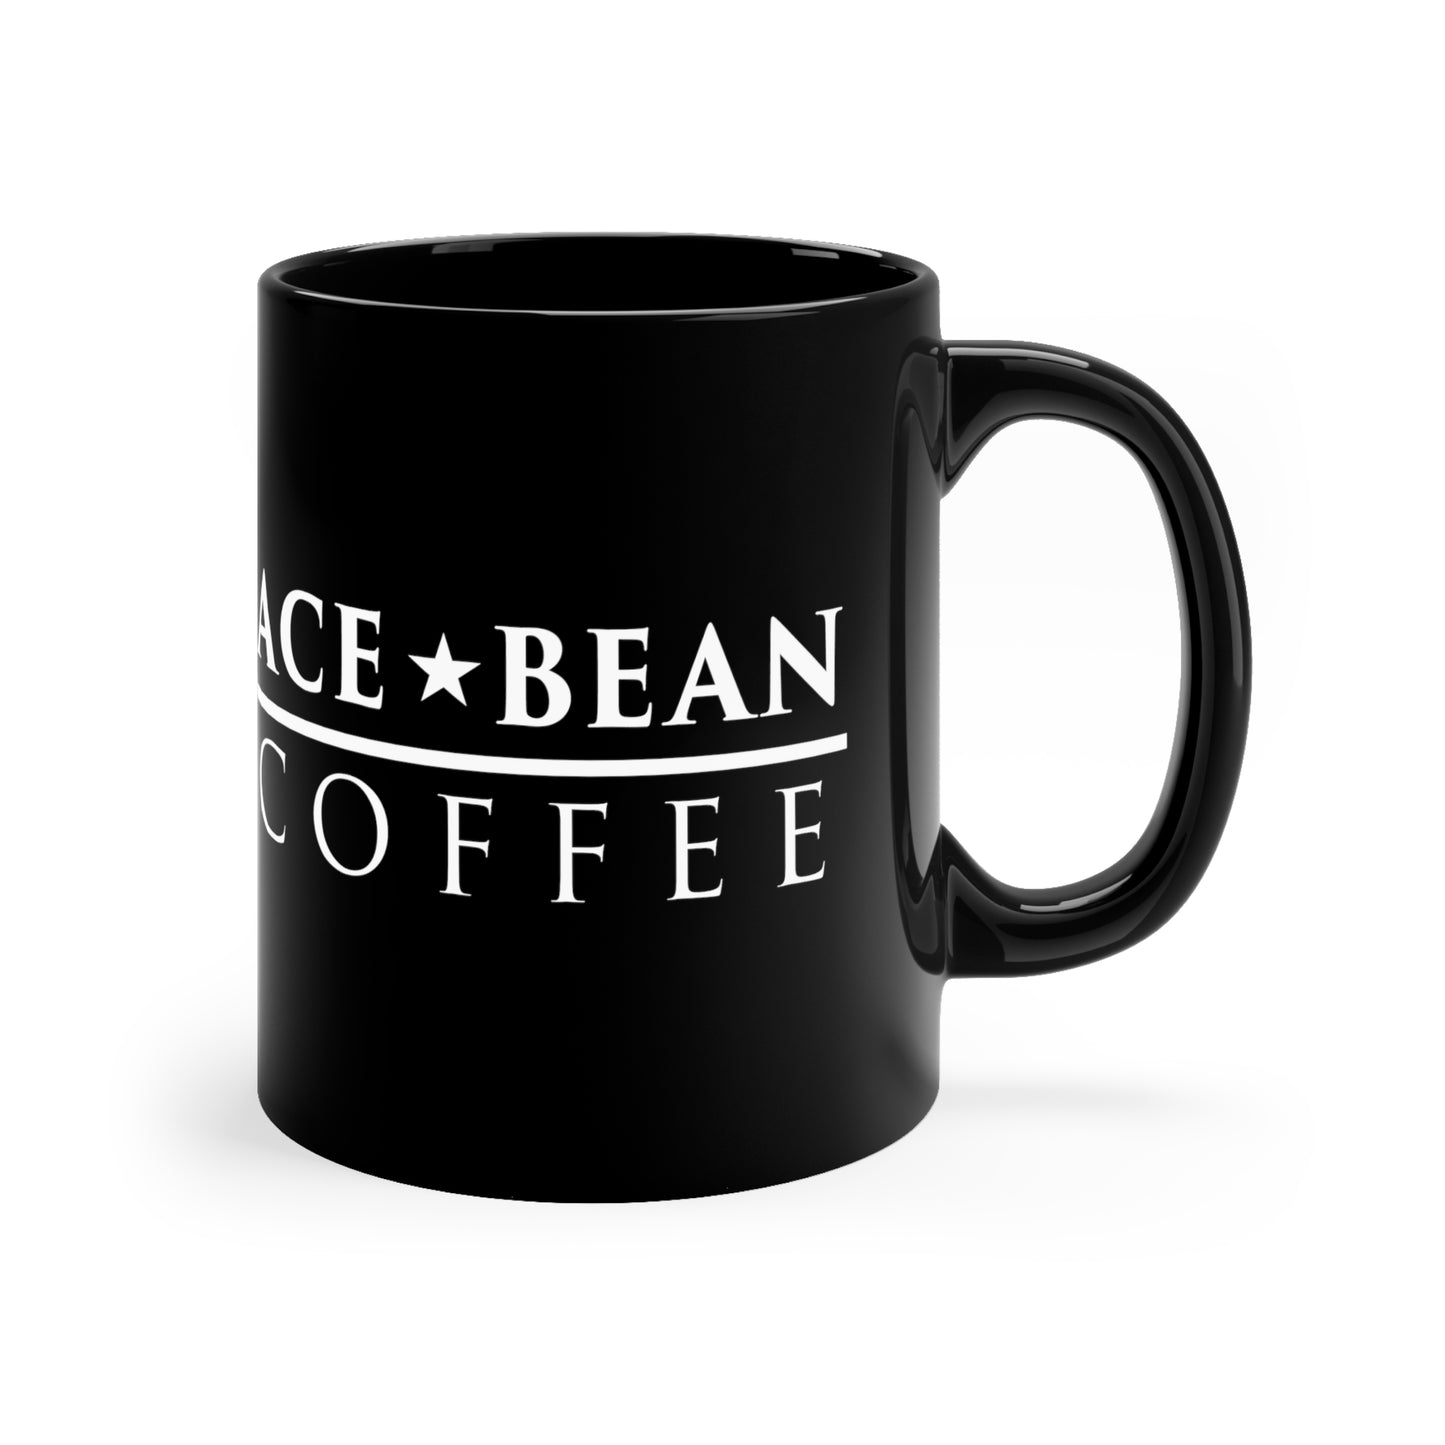 Ace Bean Coffee 11oz Black Mug